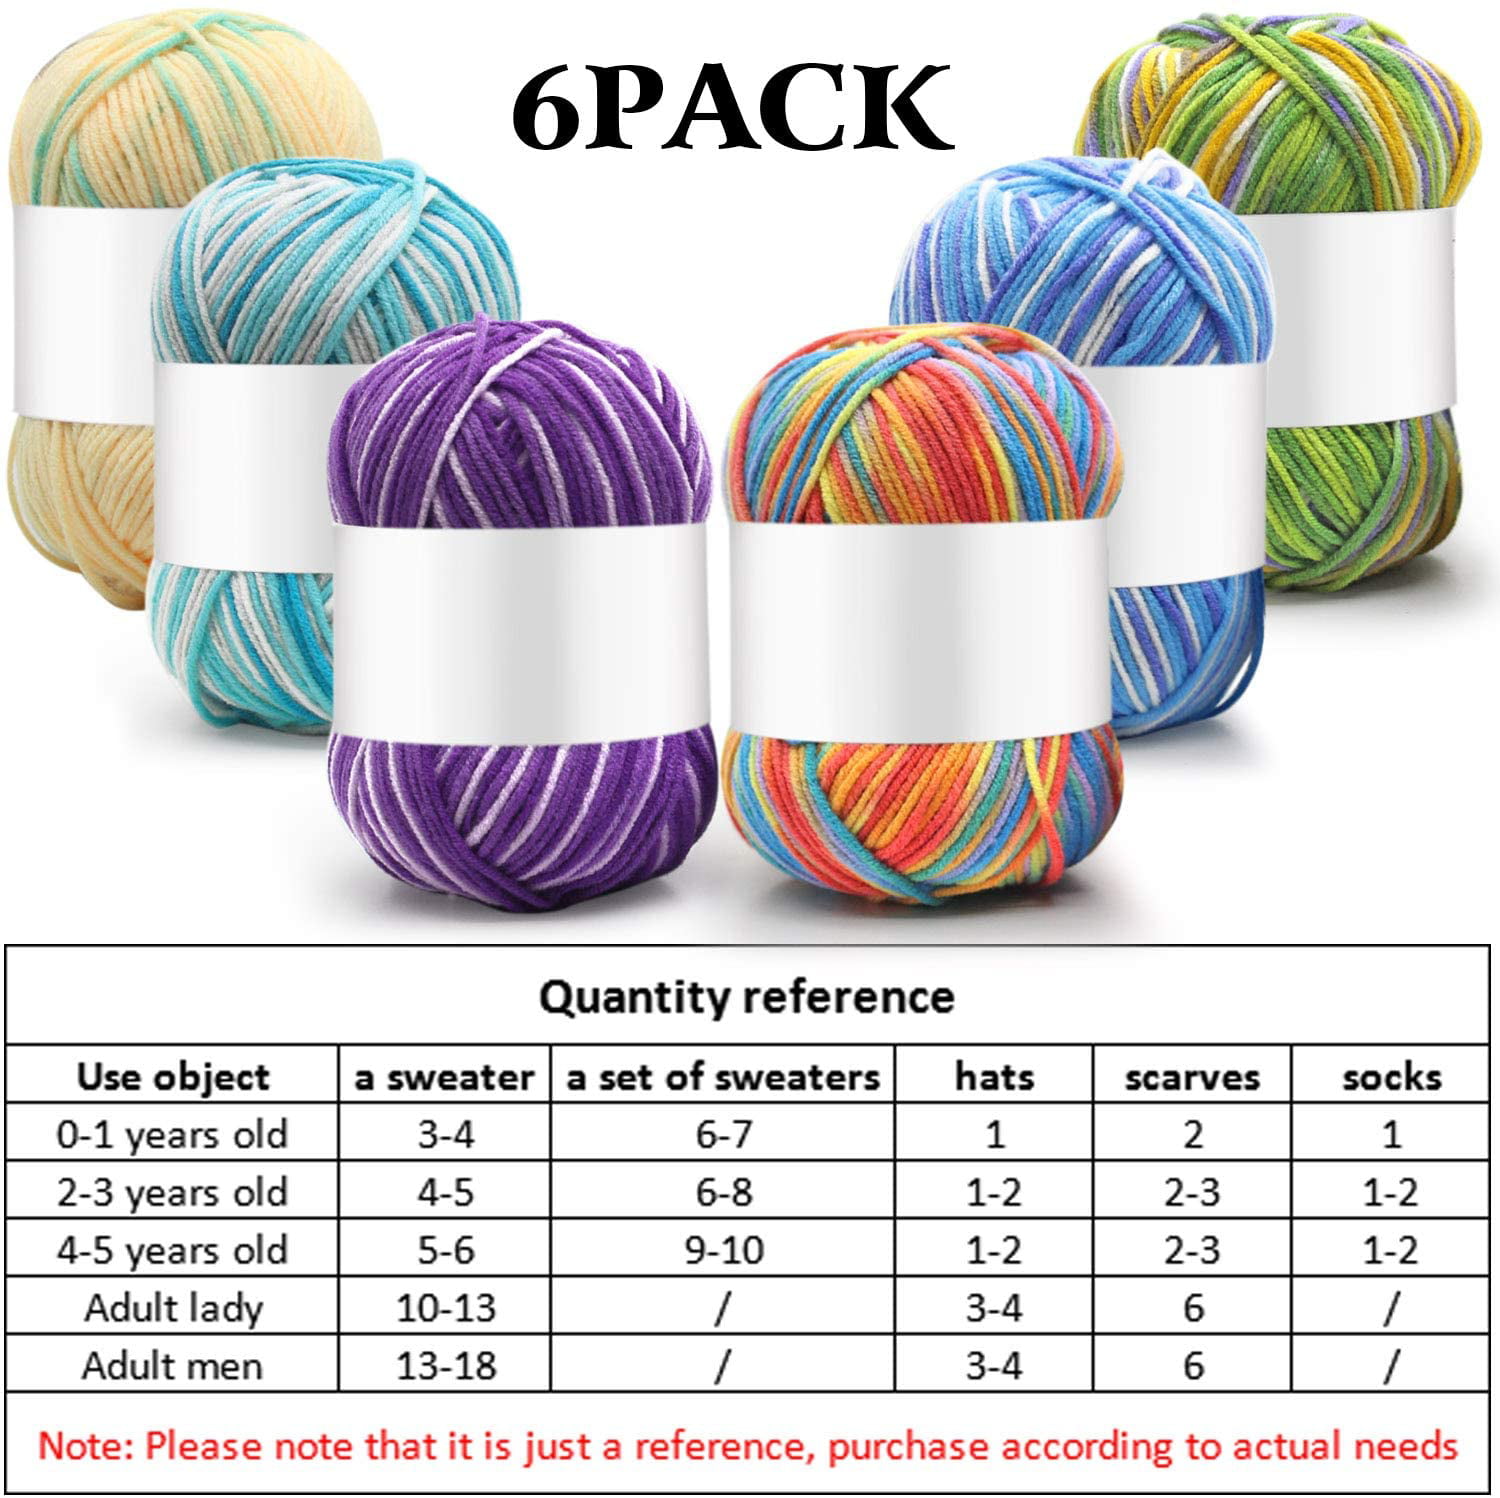 WILLBOND 6 Pcs 50g Crochet Yarn Multi Colored Knitting Yarn Bulk Acrylic  Weaving Yarn Crocheting Thread (Blue White, Purple White, Purple Yellow,  Purple Pink, Purple, Purple Blue, 5-Ply)